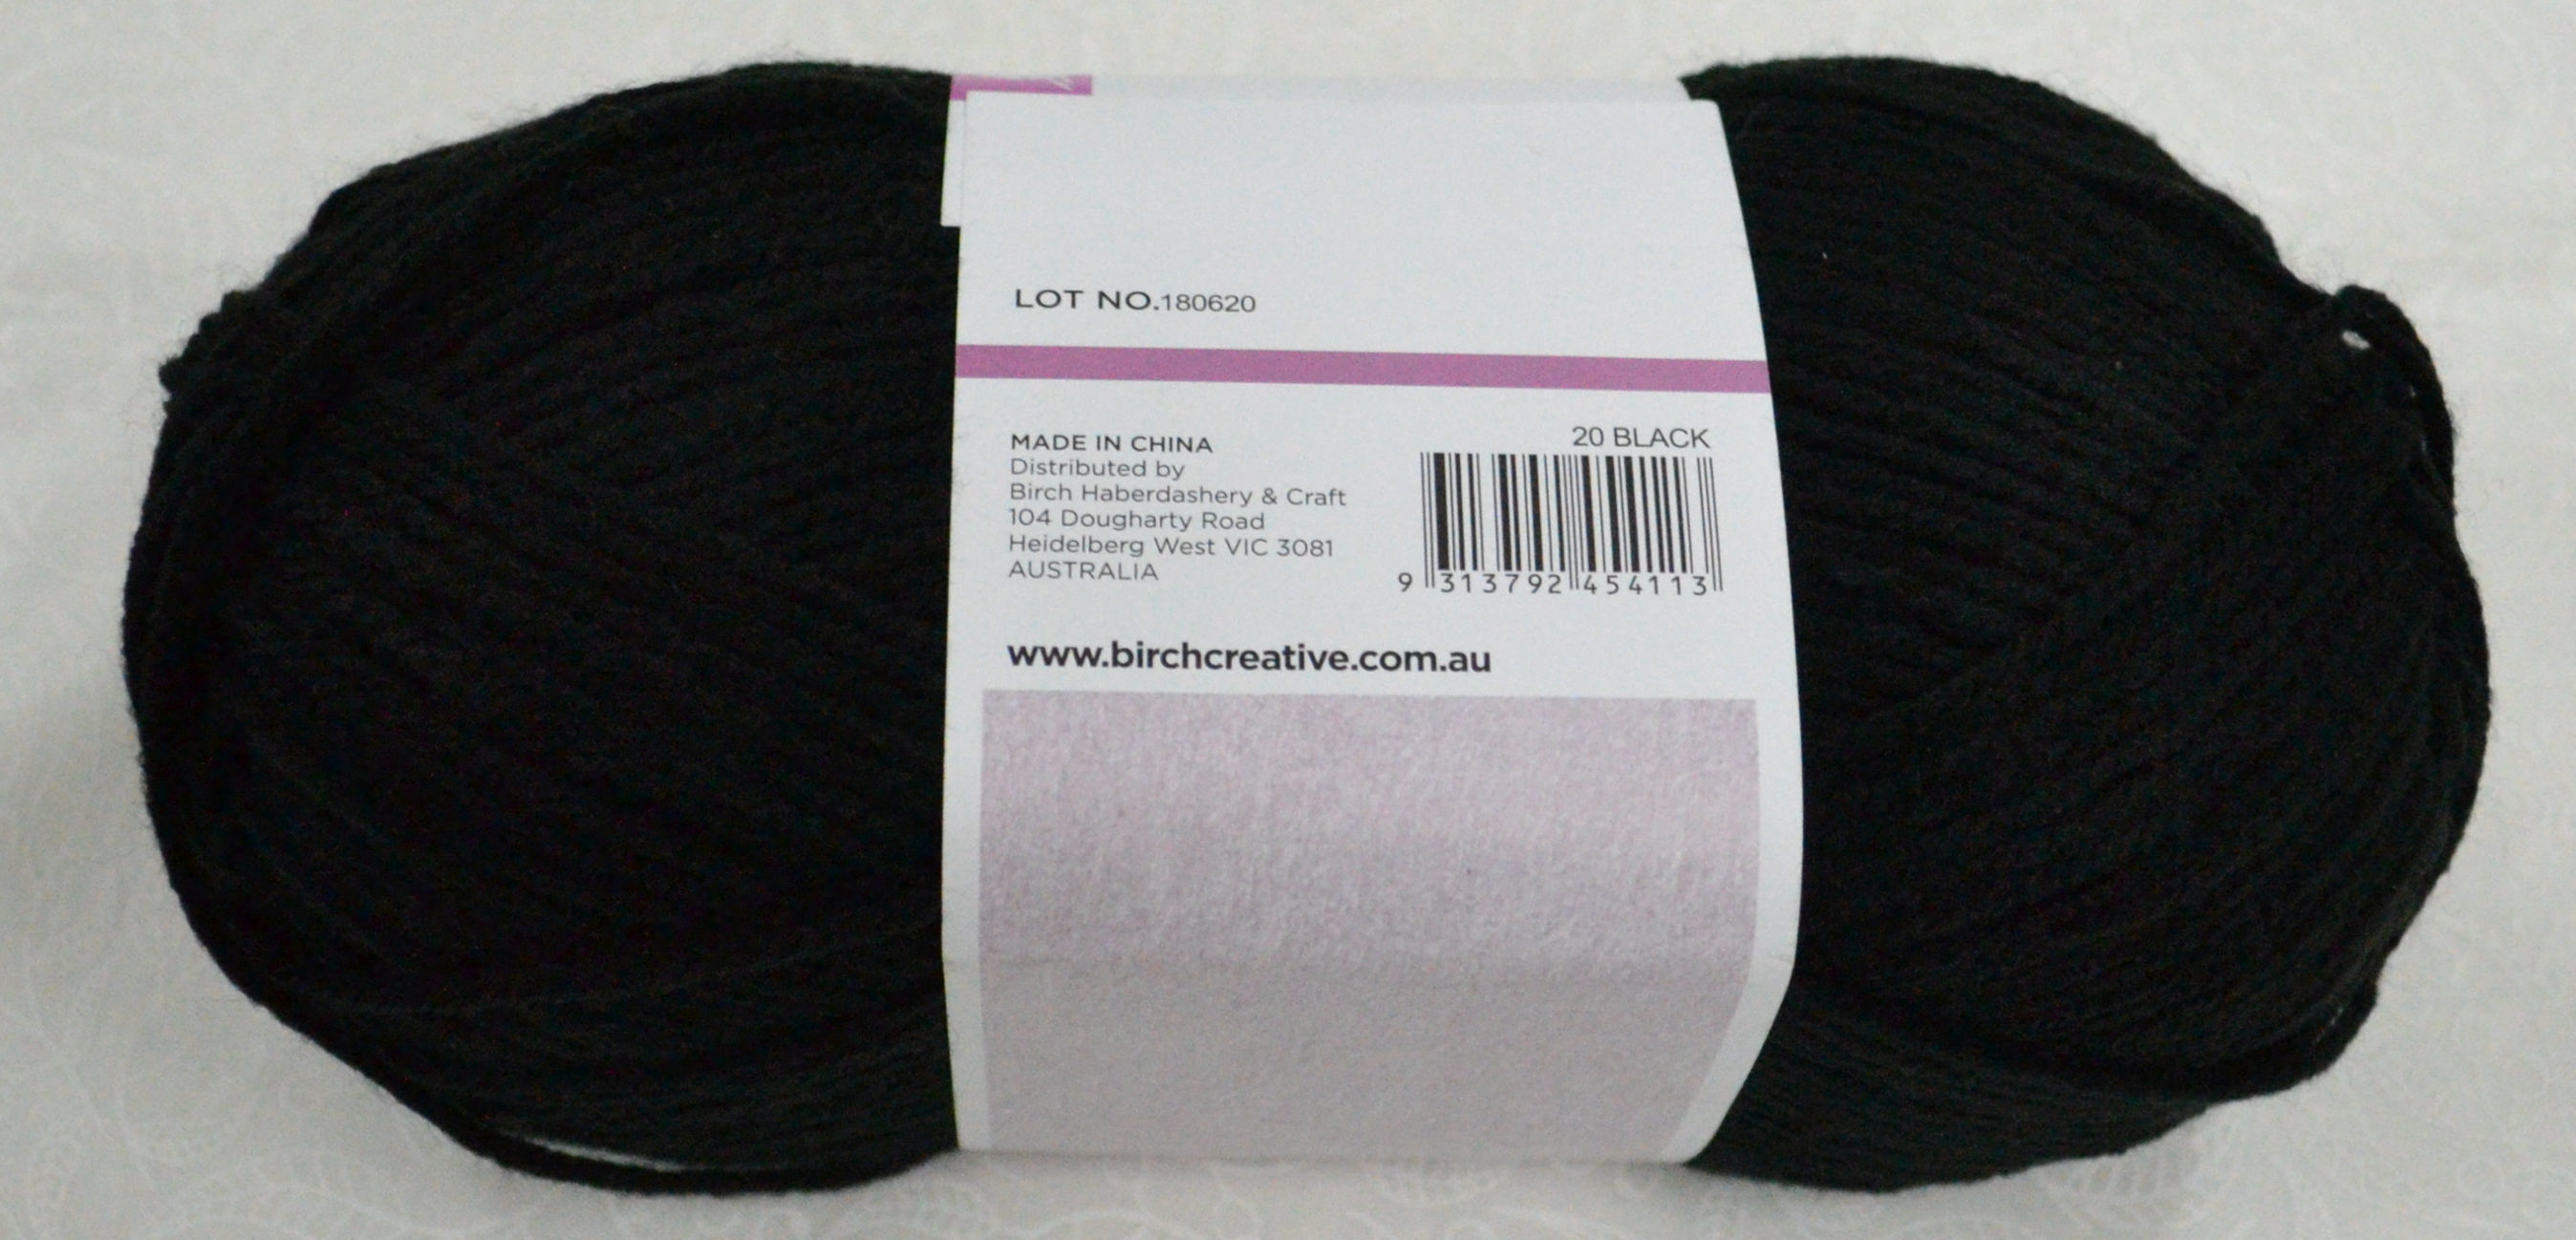 Birch Creative 100% Acrylic Knitting Yarn, 8 Ply, 100g 